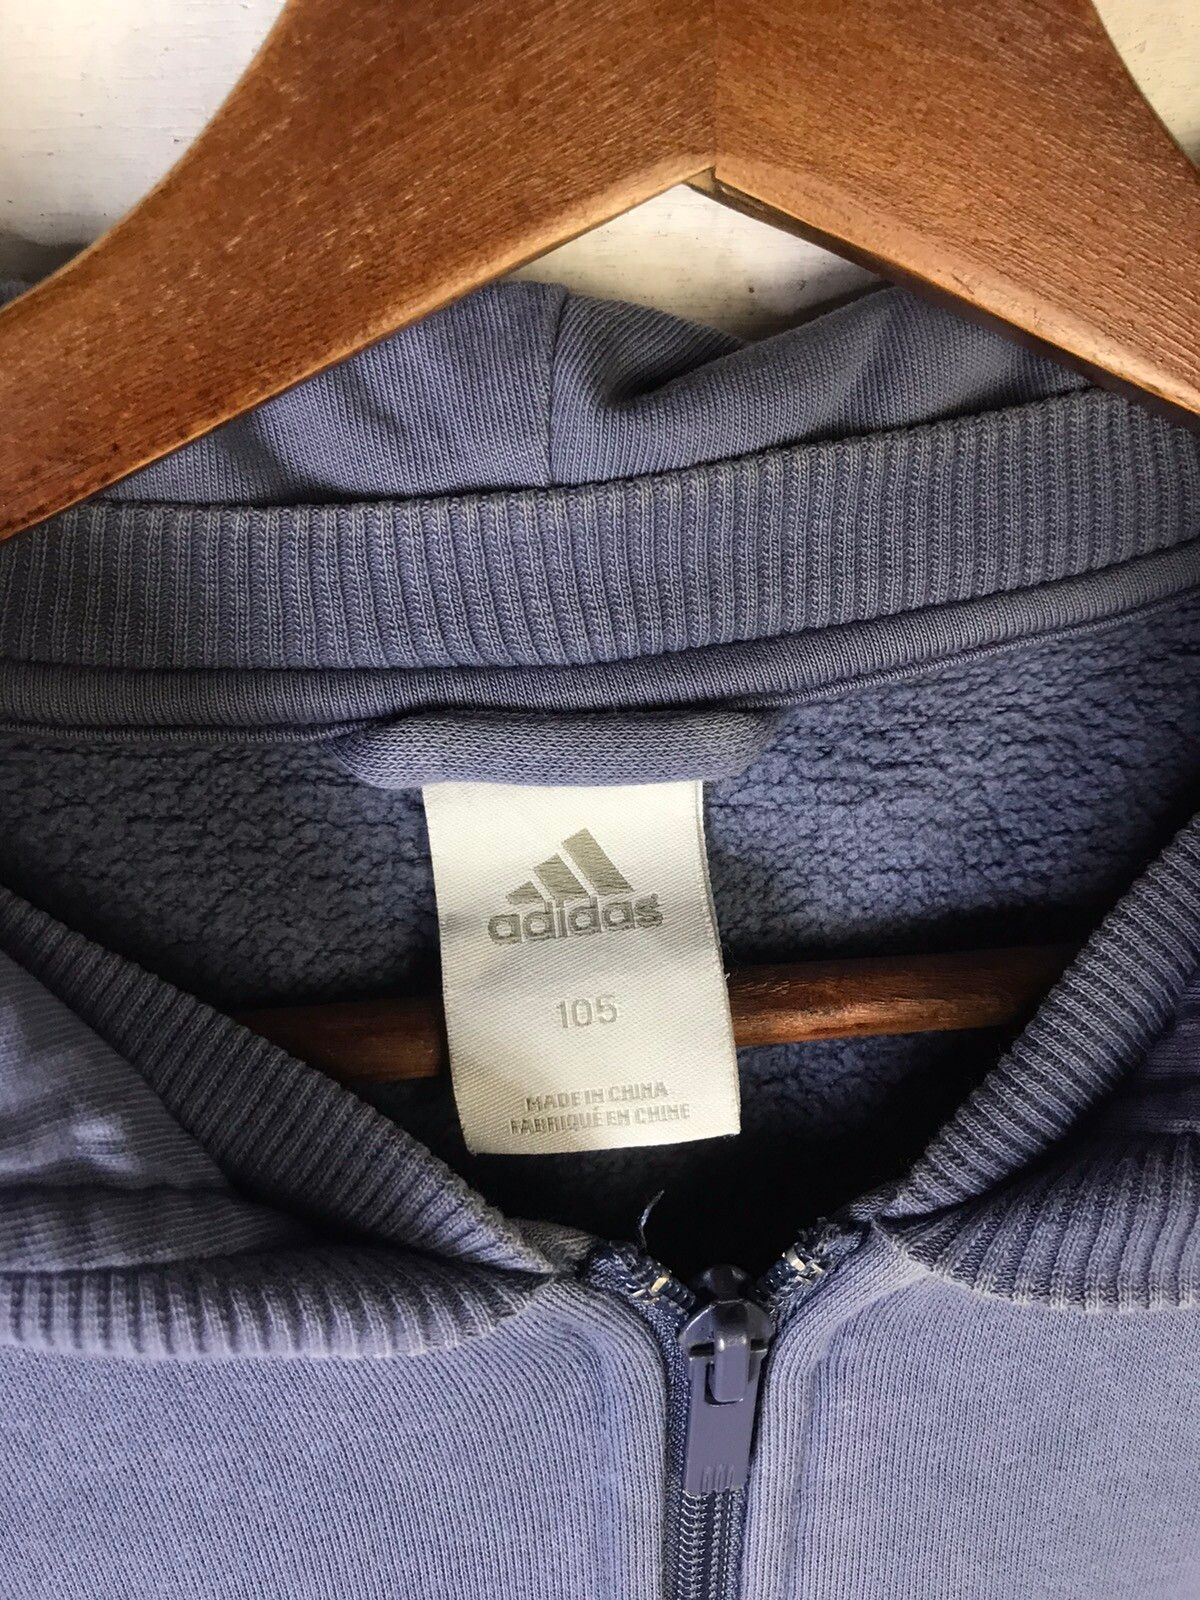 Adidas Adidas x Chelsea FC Zipper Hoodie Sweater Size US M / EU 48-50 / 2 - 6 Thumbnail